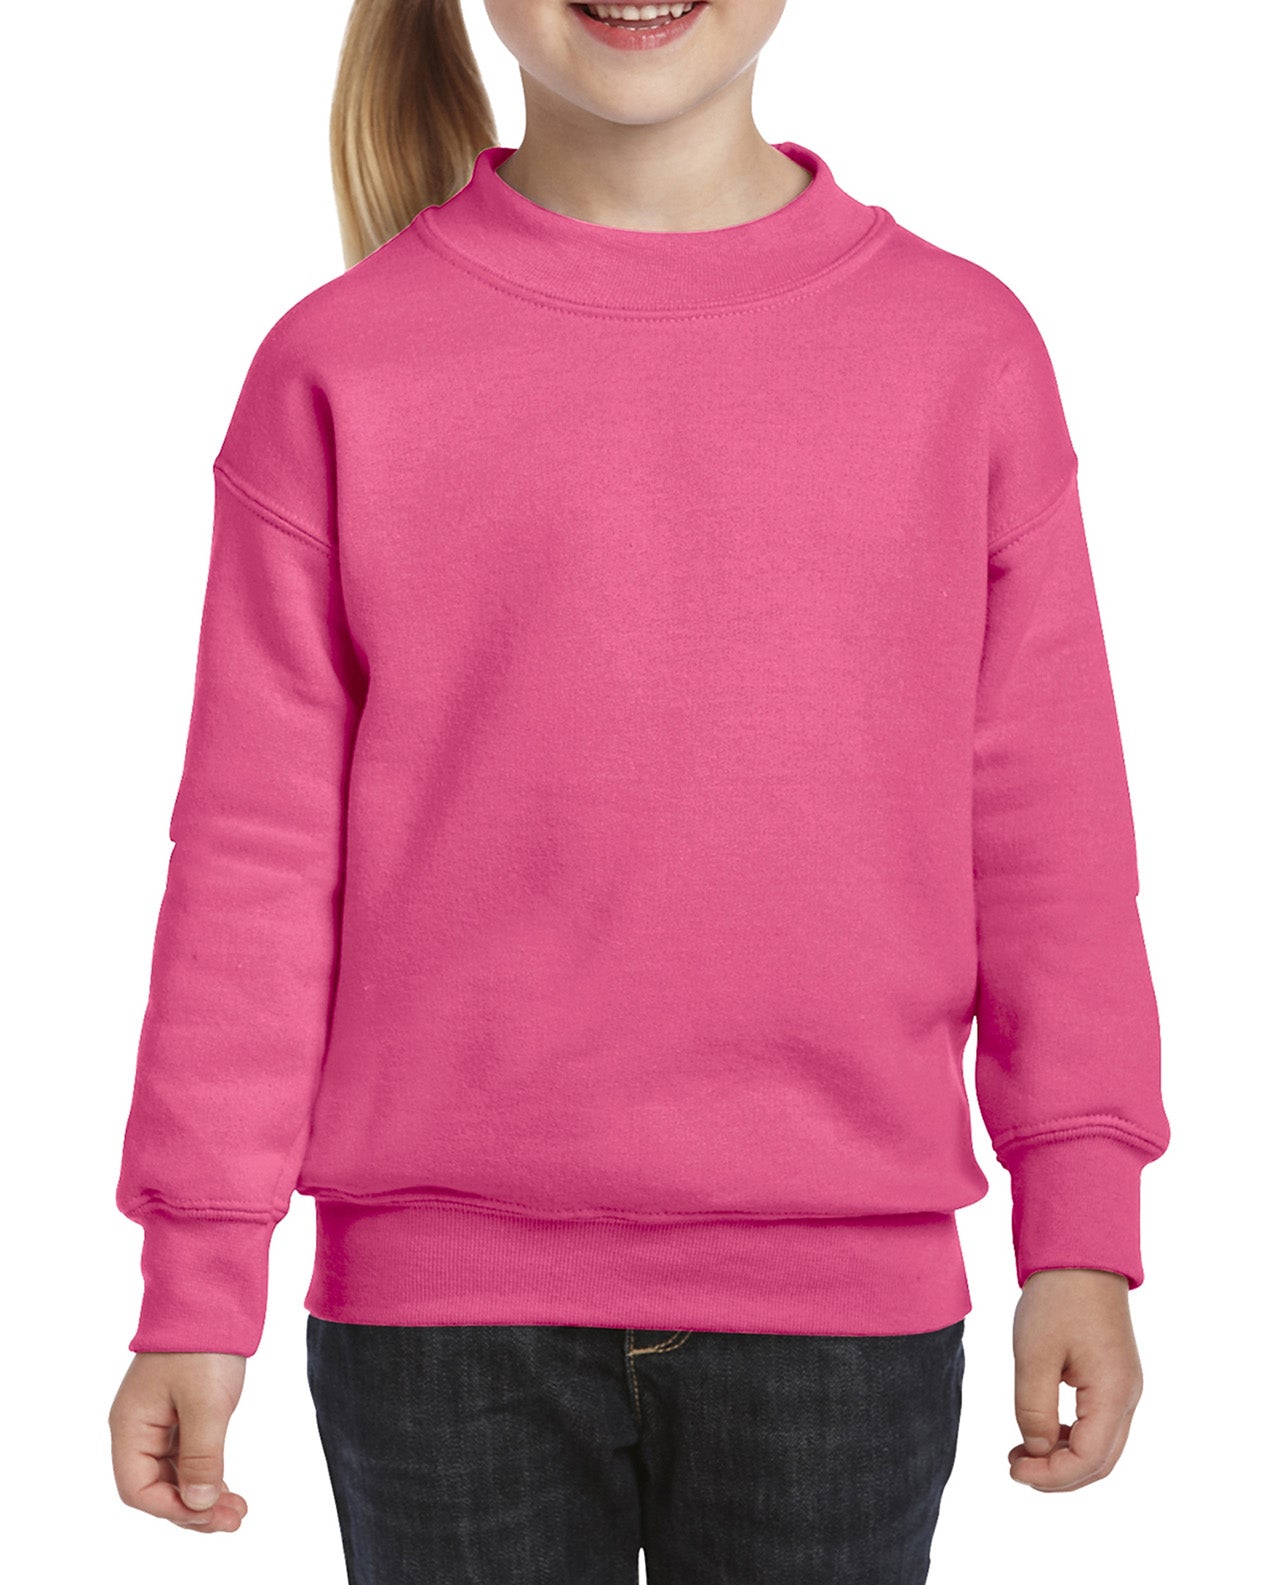 Kid's Sweatshirt